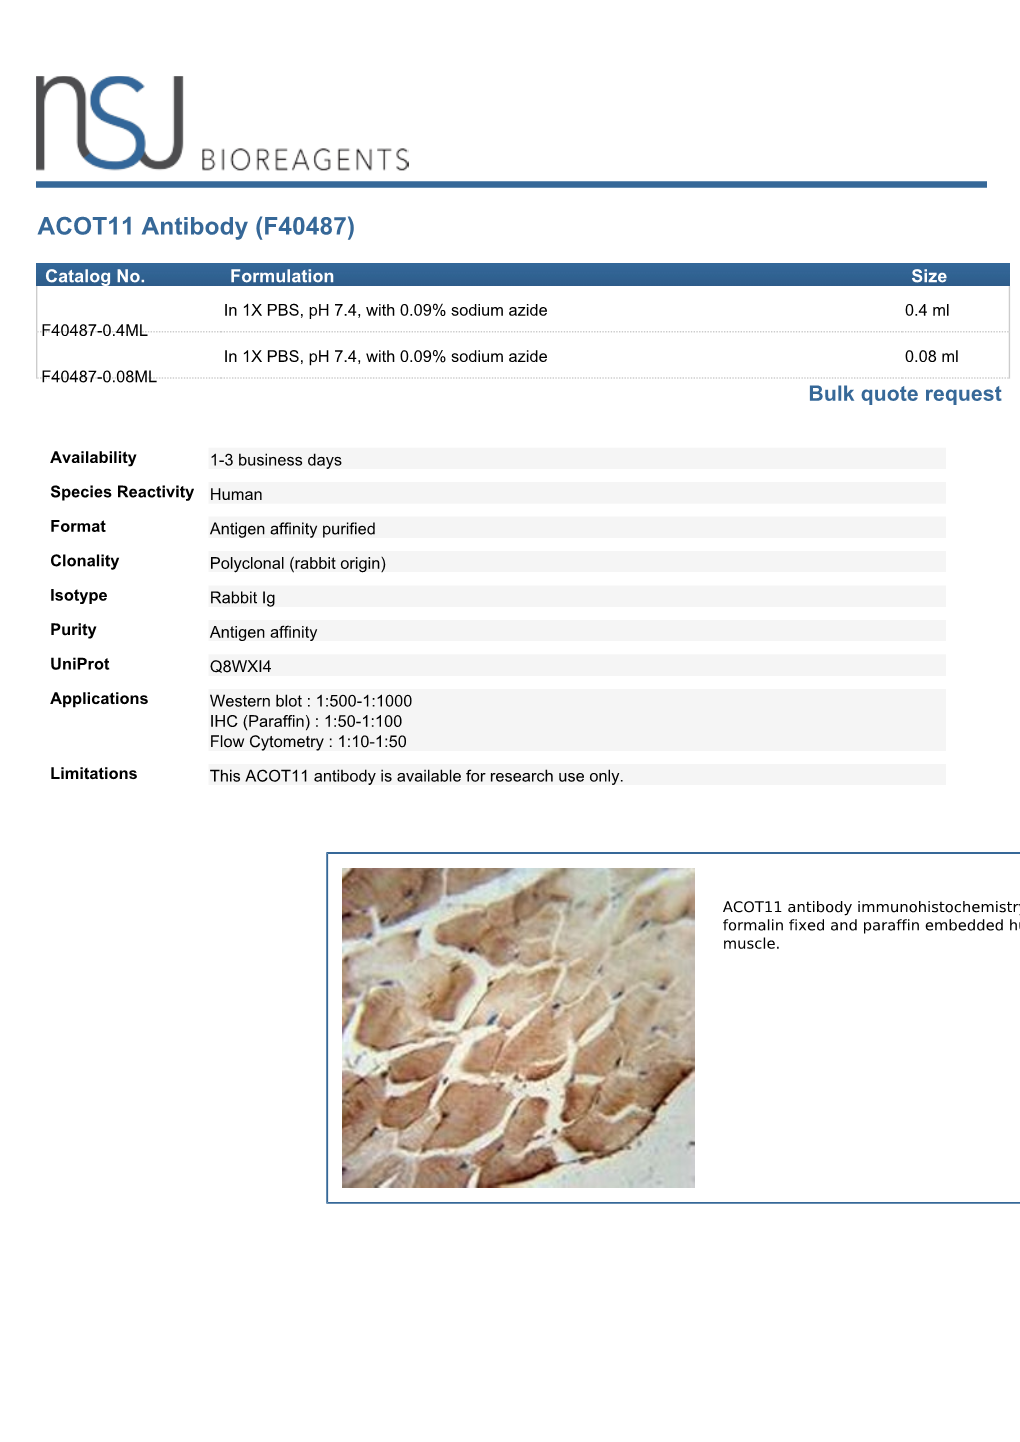 ACOT11 Antibody (F40487)